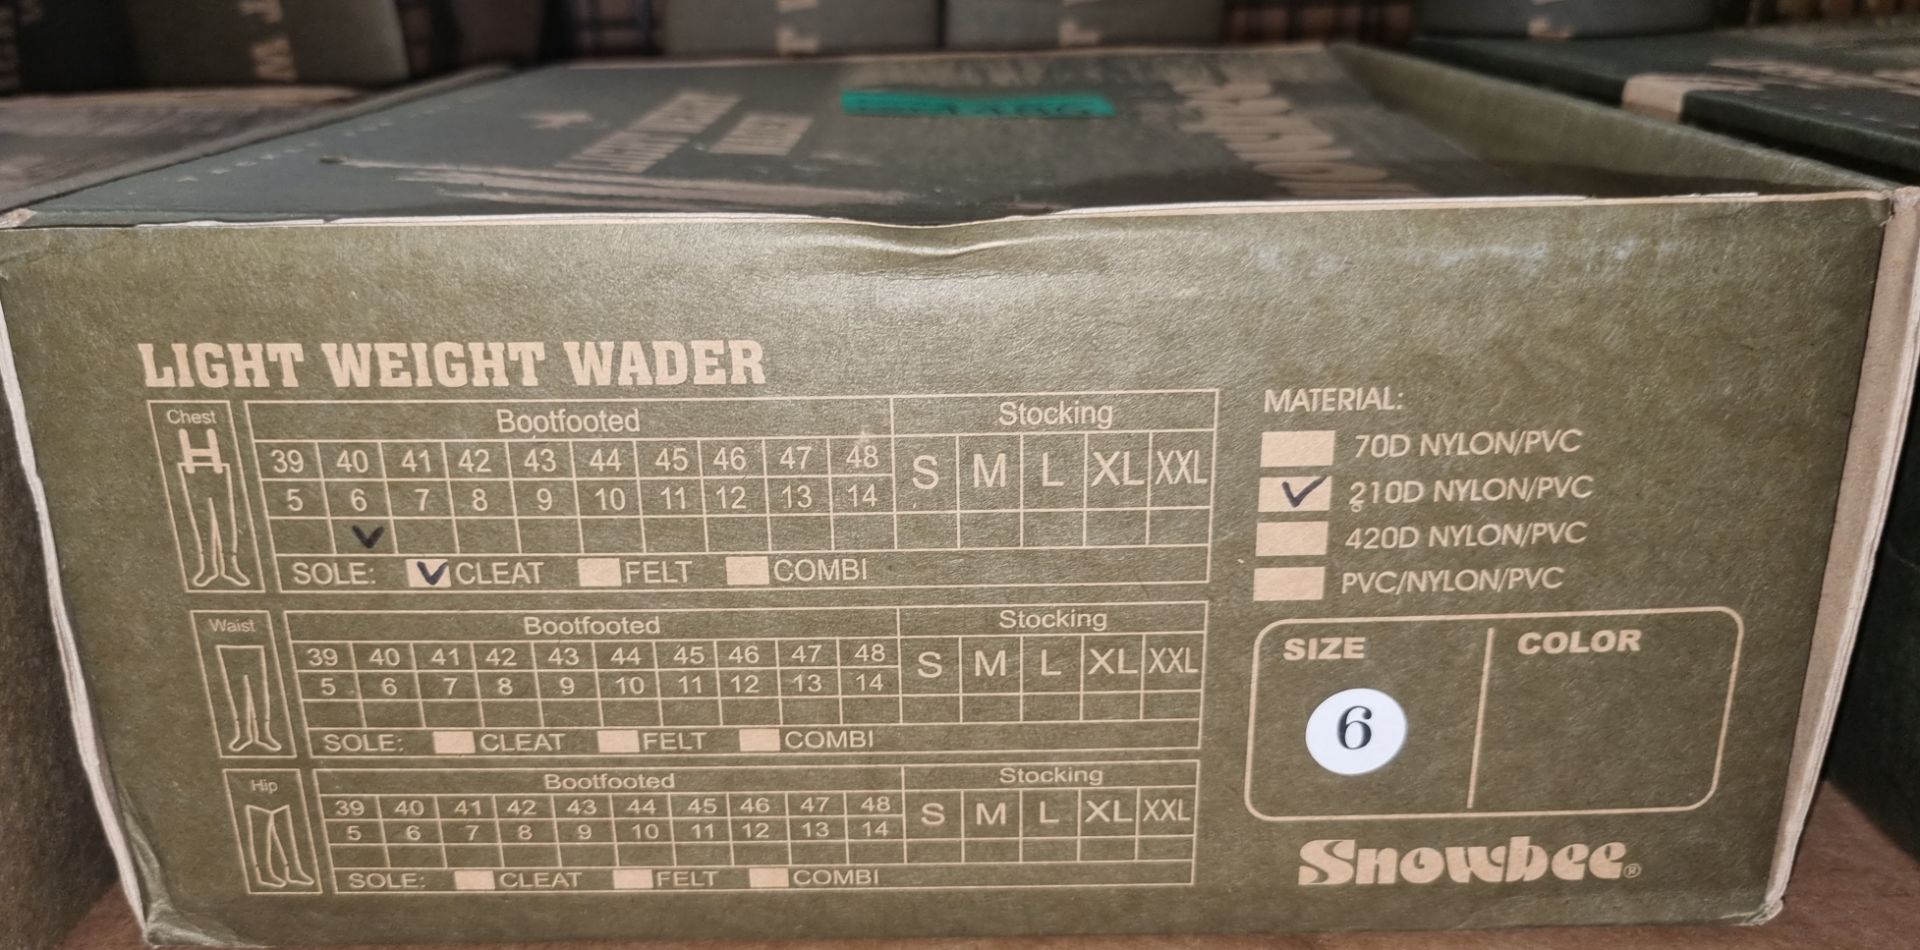 Shobee lightweight wader 210D nylon/pvc - size 6 - Image 3 of 3